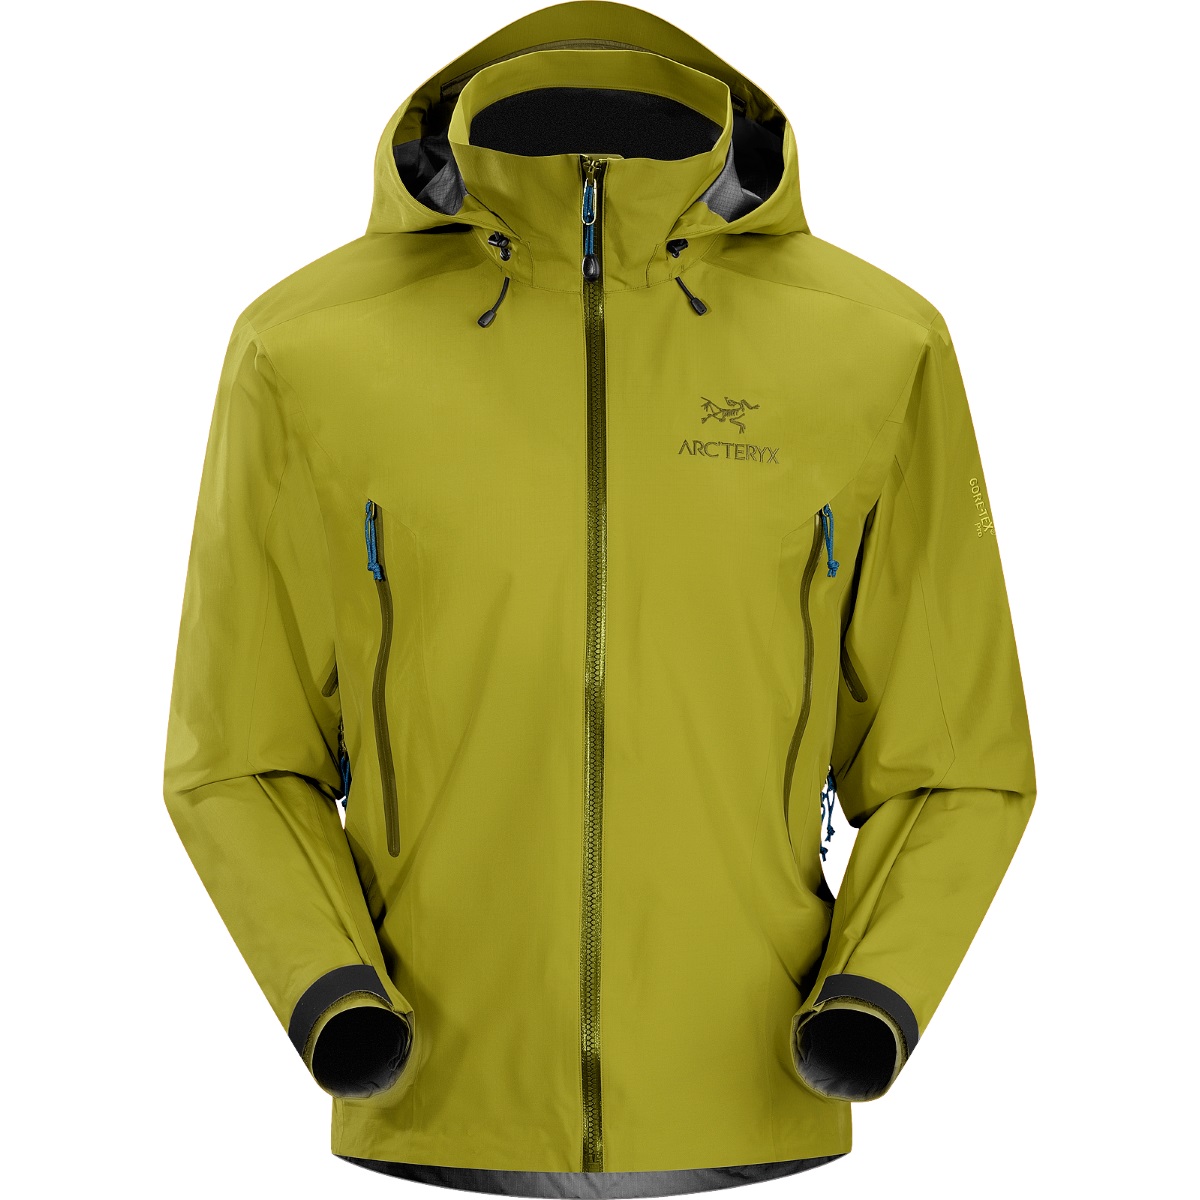 Arc'teryx Beta AR Jacket, men's, discontinued Spring 2014-2015 colors ...